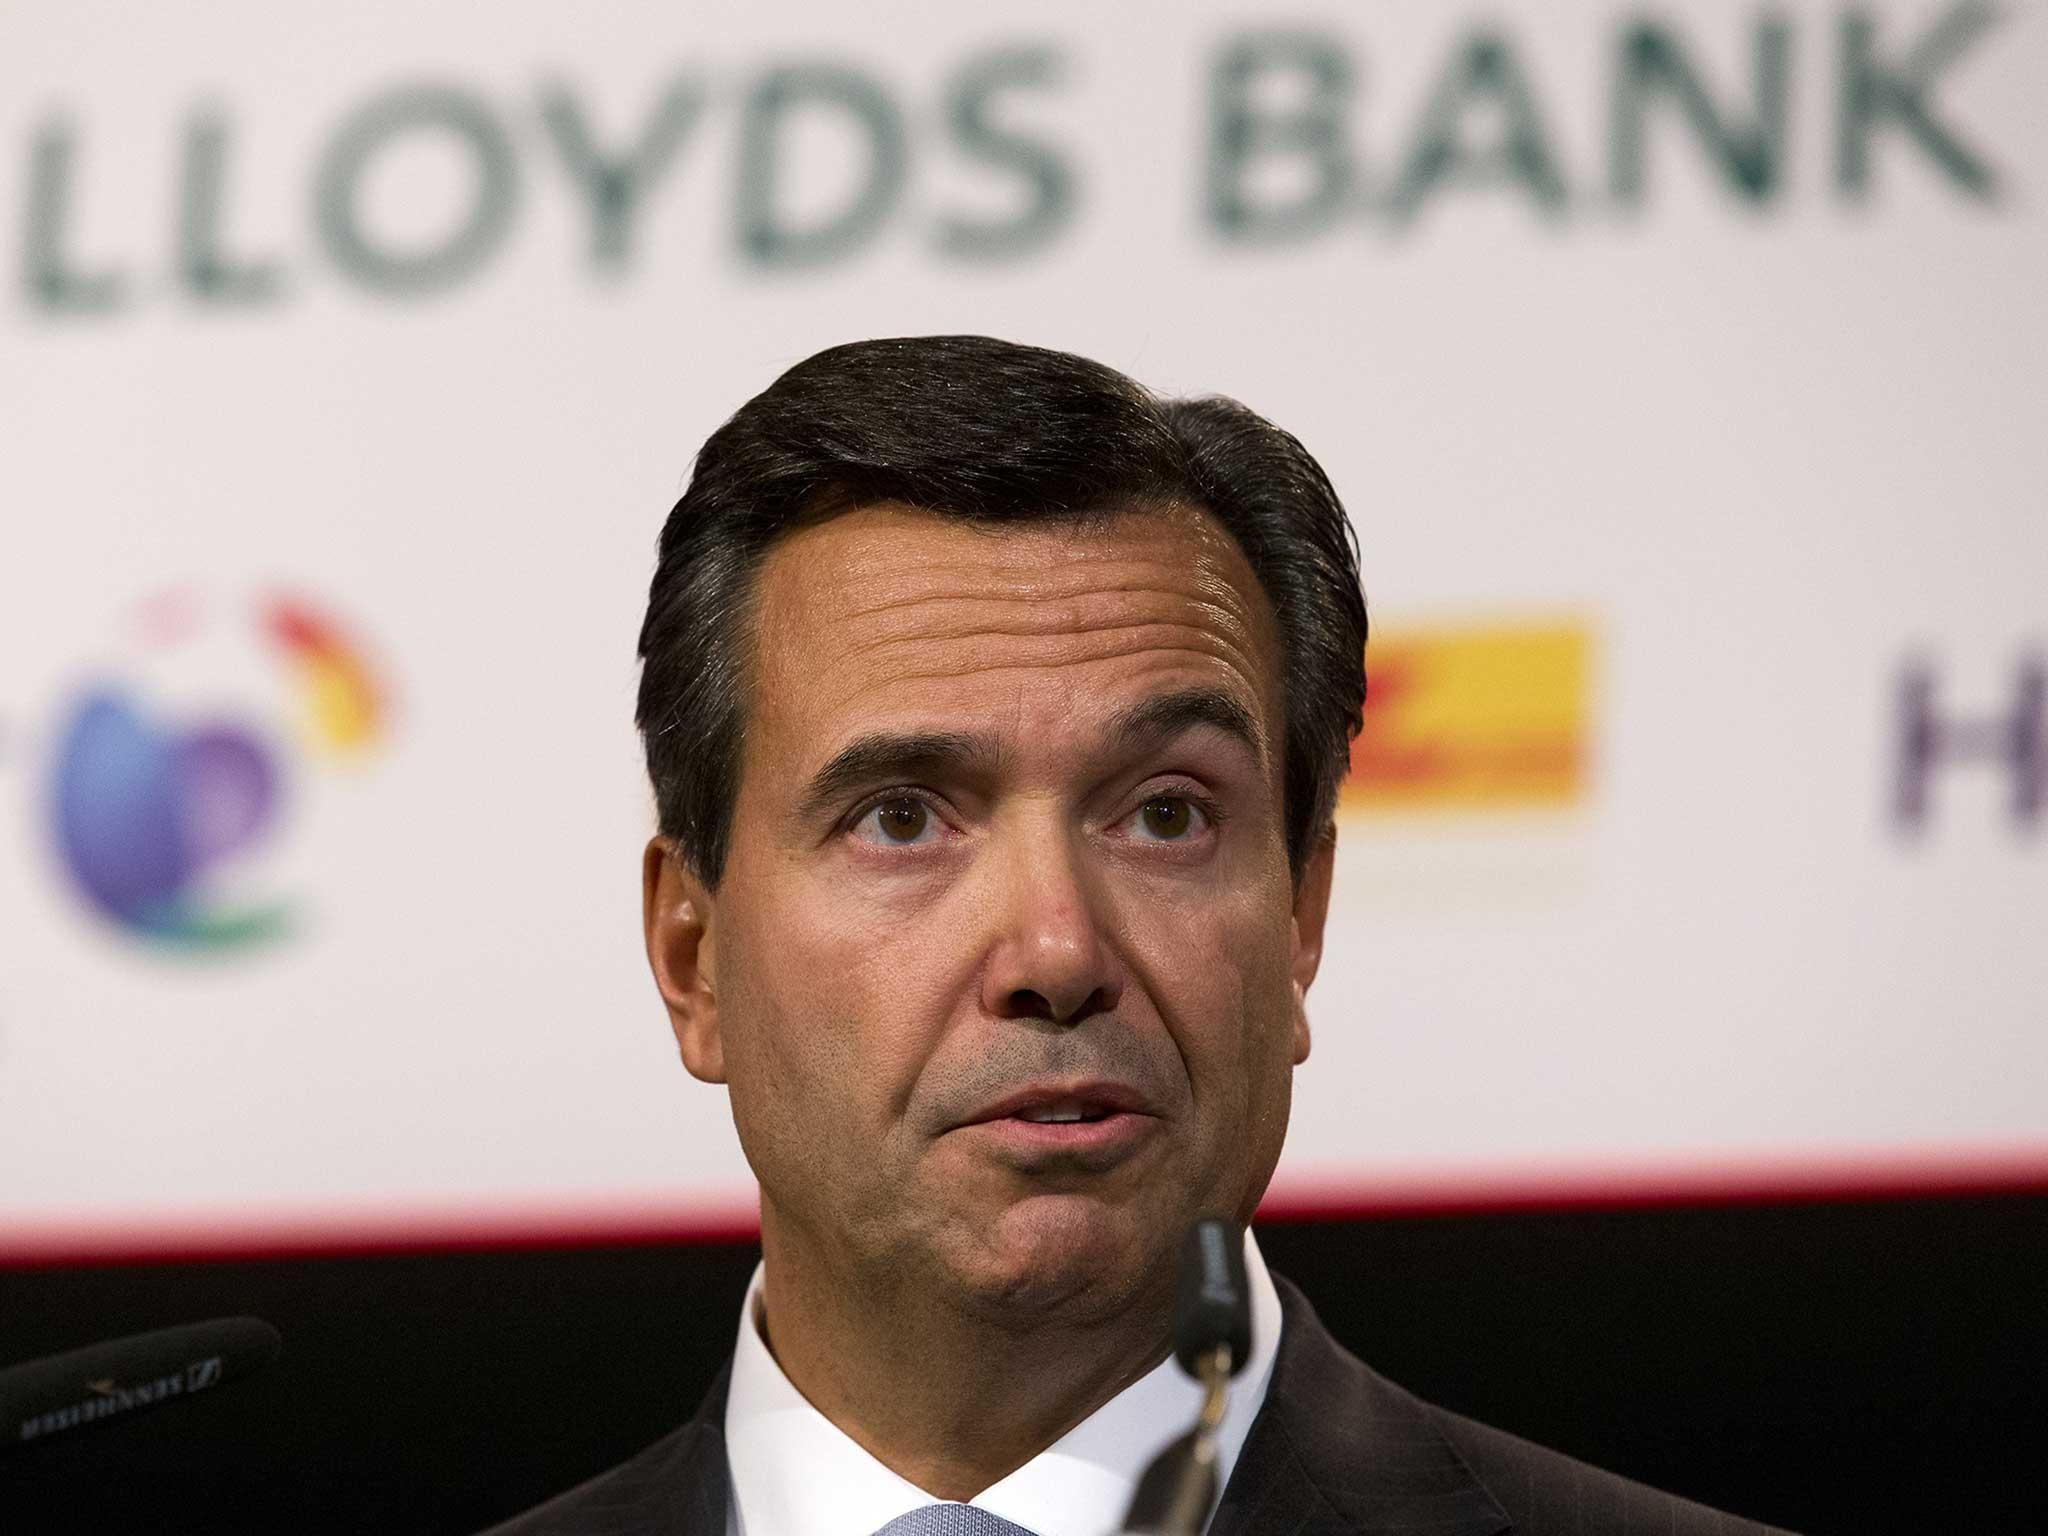 Antonio Horta-Osorio, Lloyds chief executive, deepened job cuts in July